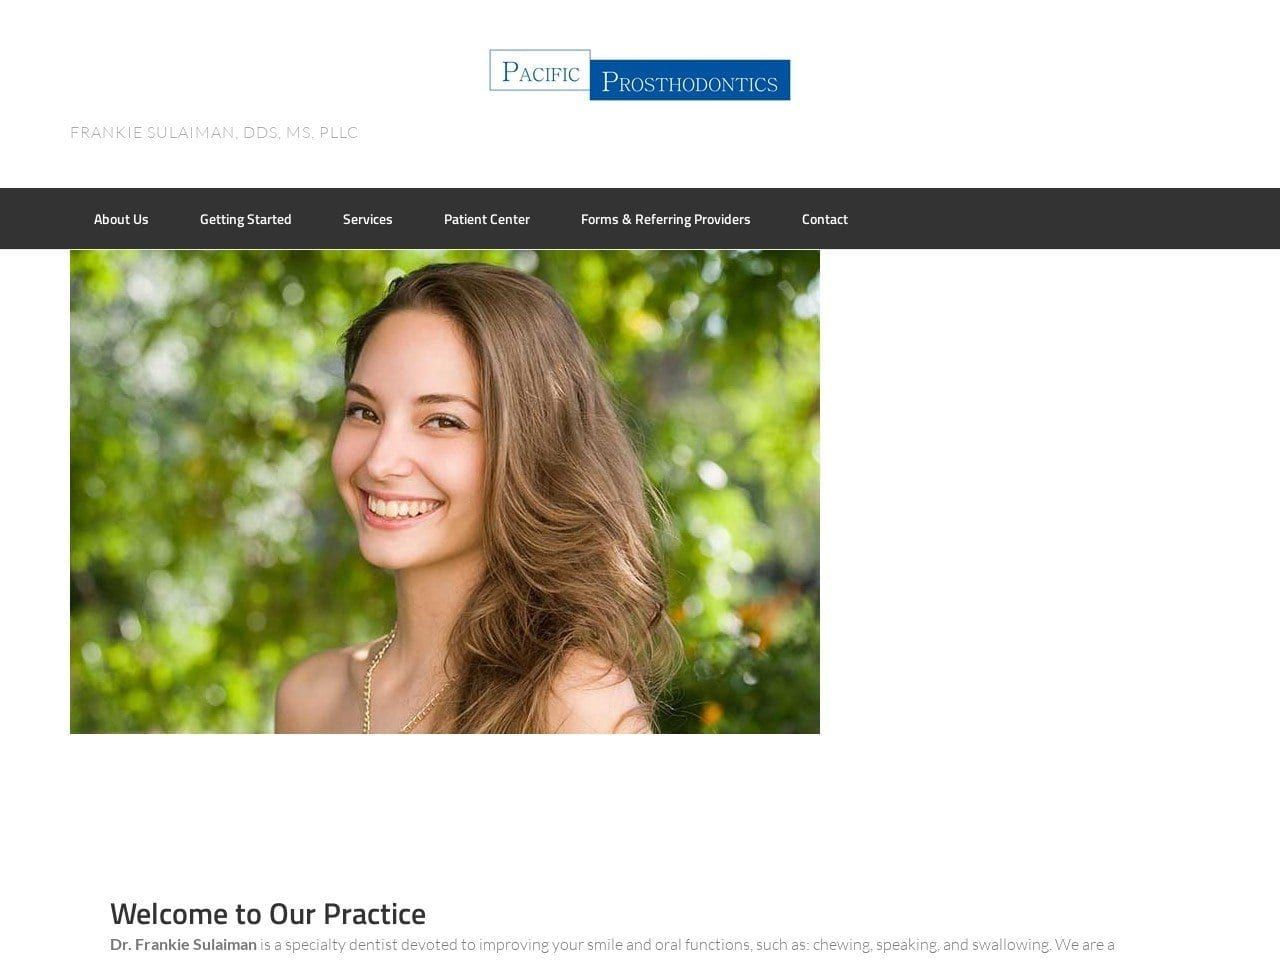 Pacific Prosthodontics Website Screenshot from pacificprosthodontics.com